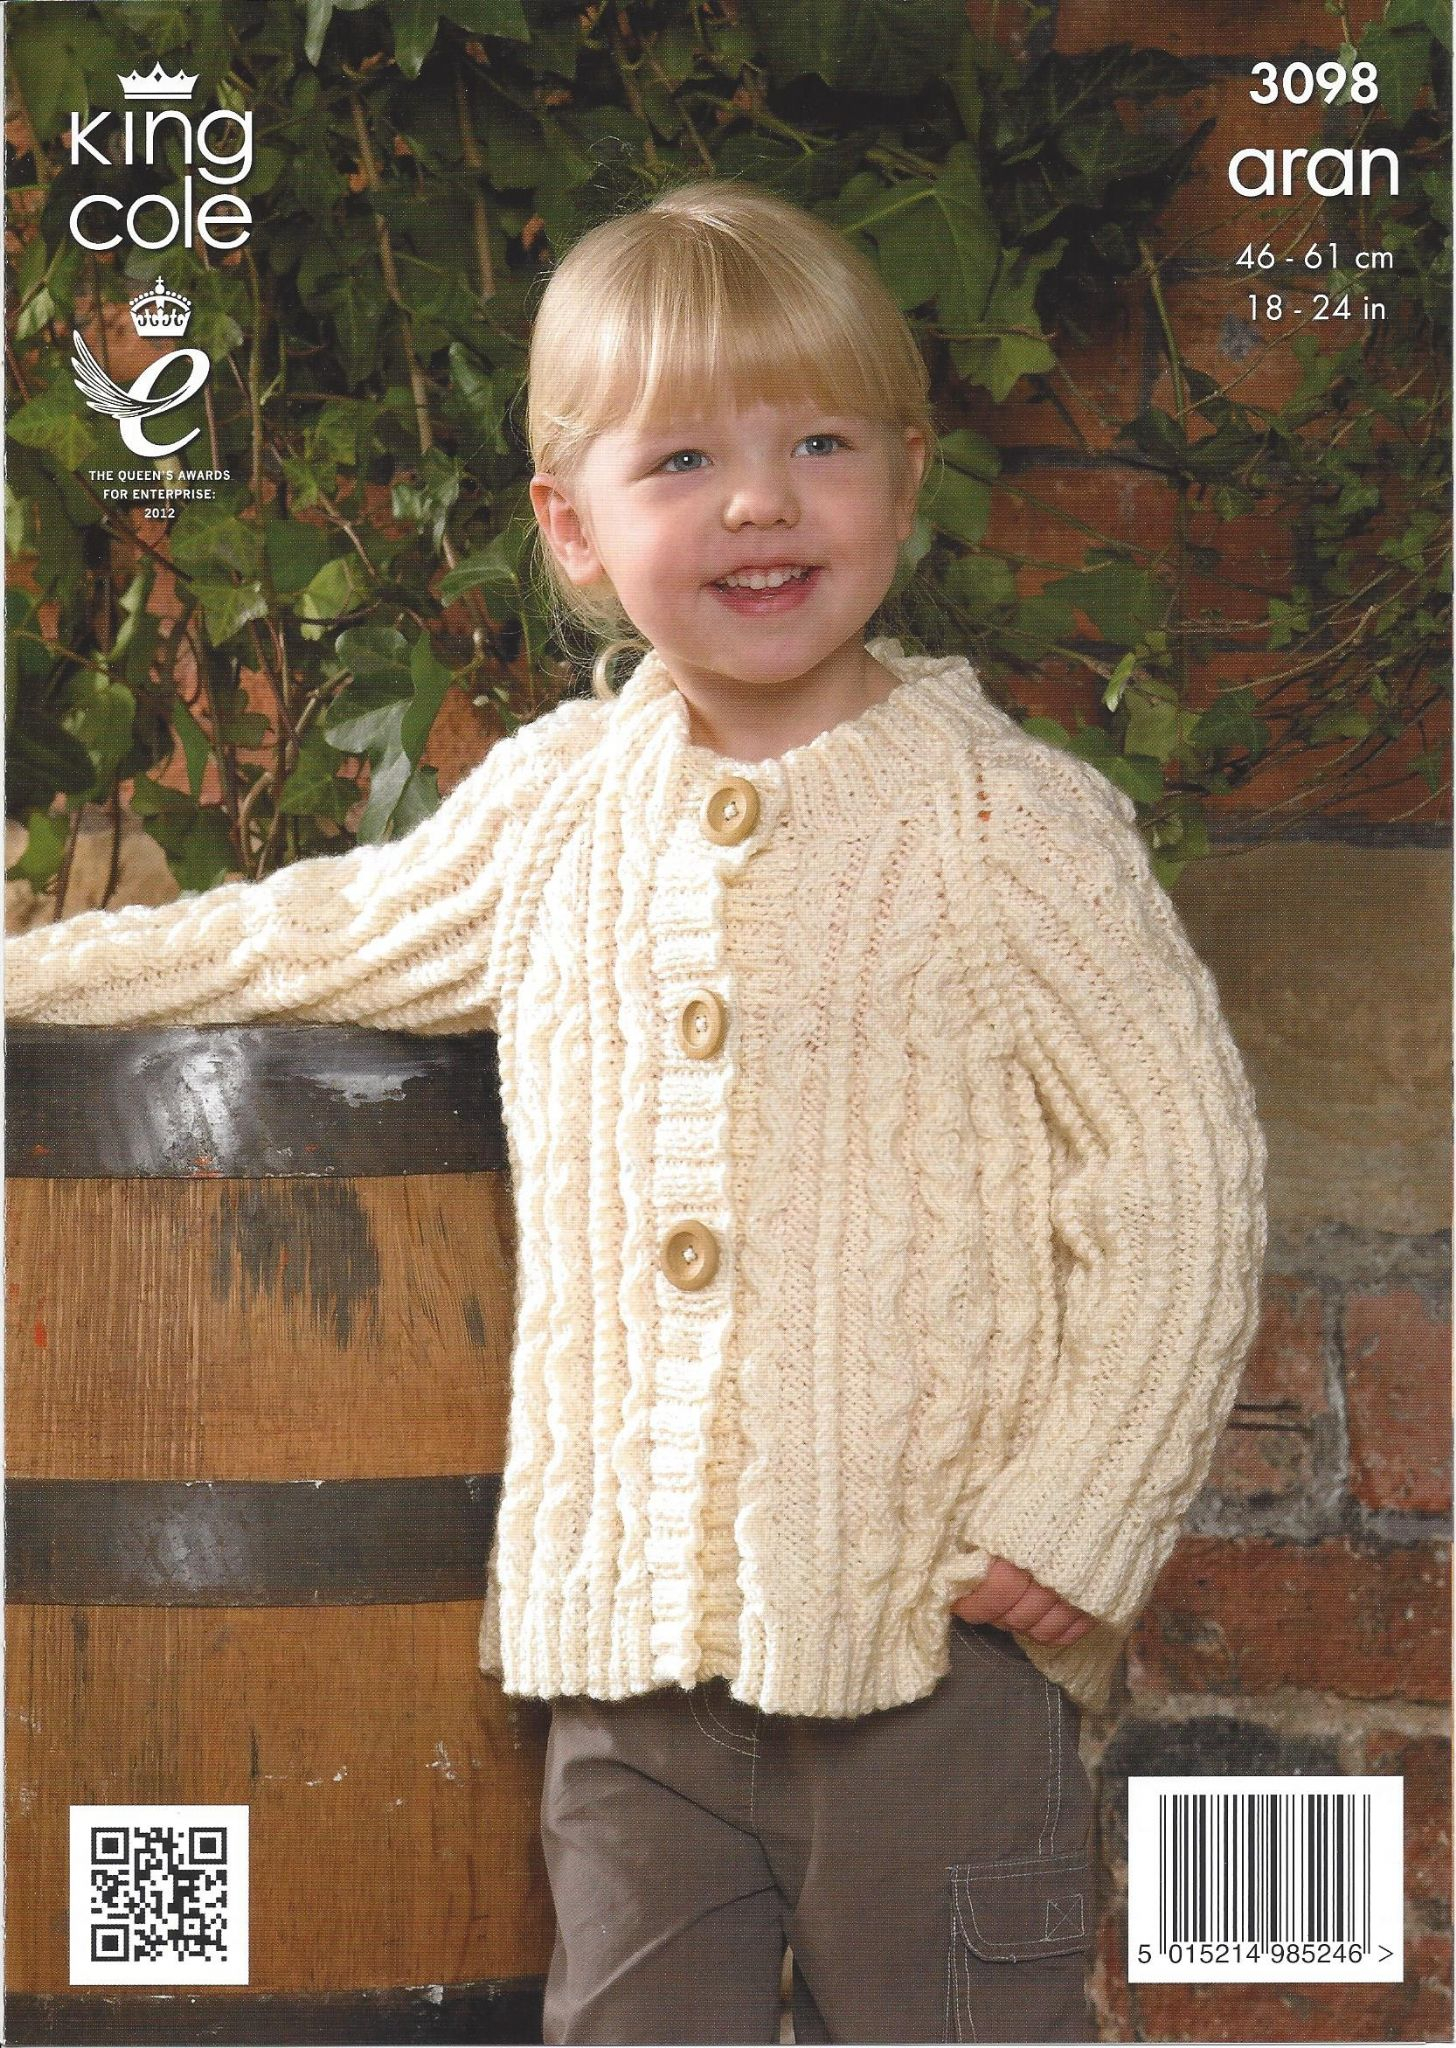 Aran Knit Cardigan Pattern King Cole Aran Knitting Pattern 3098 Sweater Hooded Jacket Coat